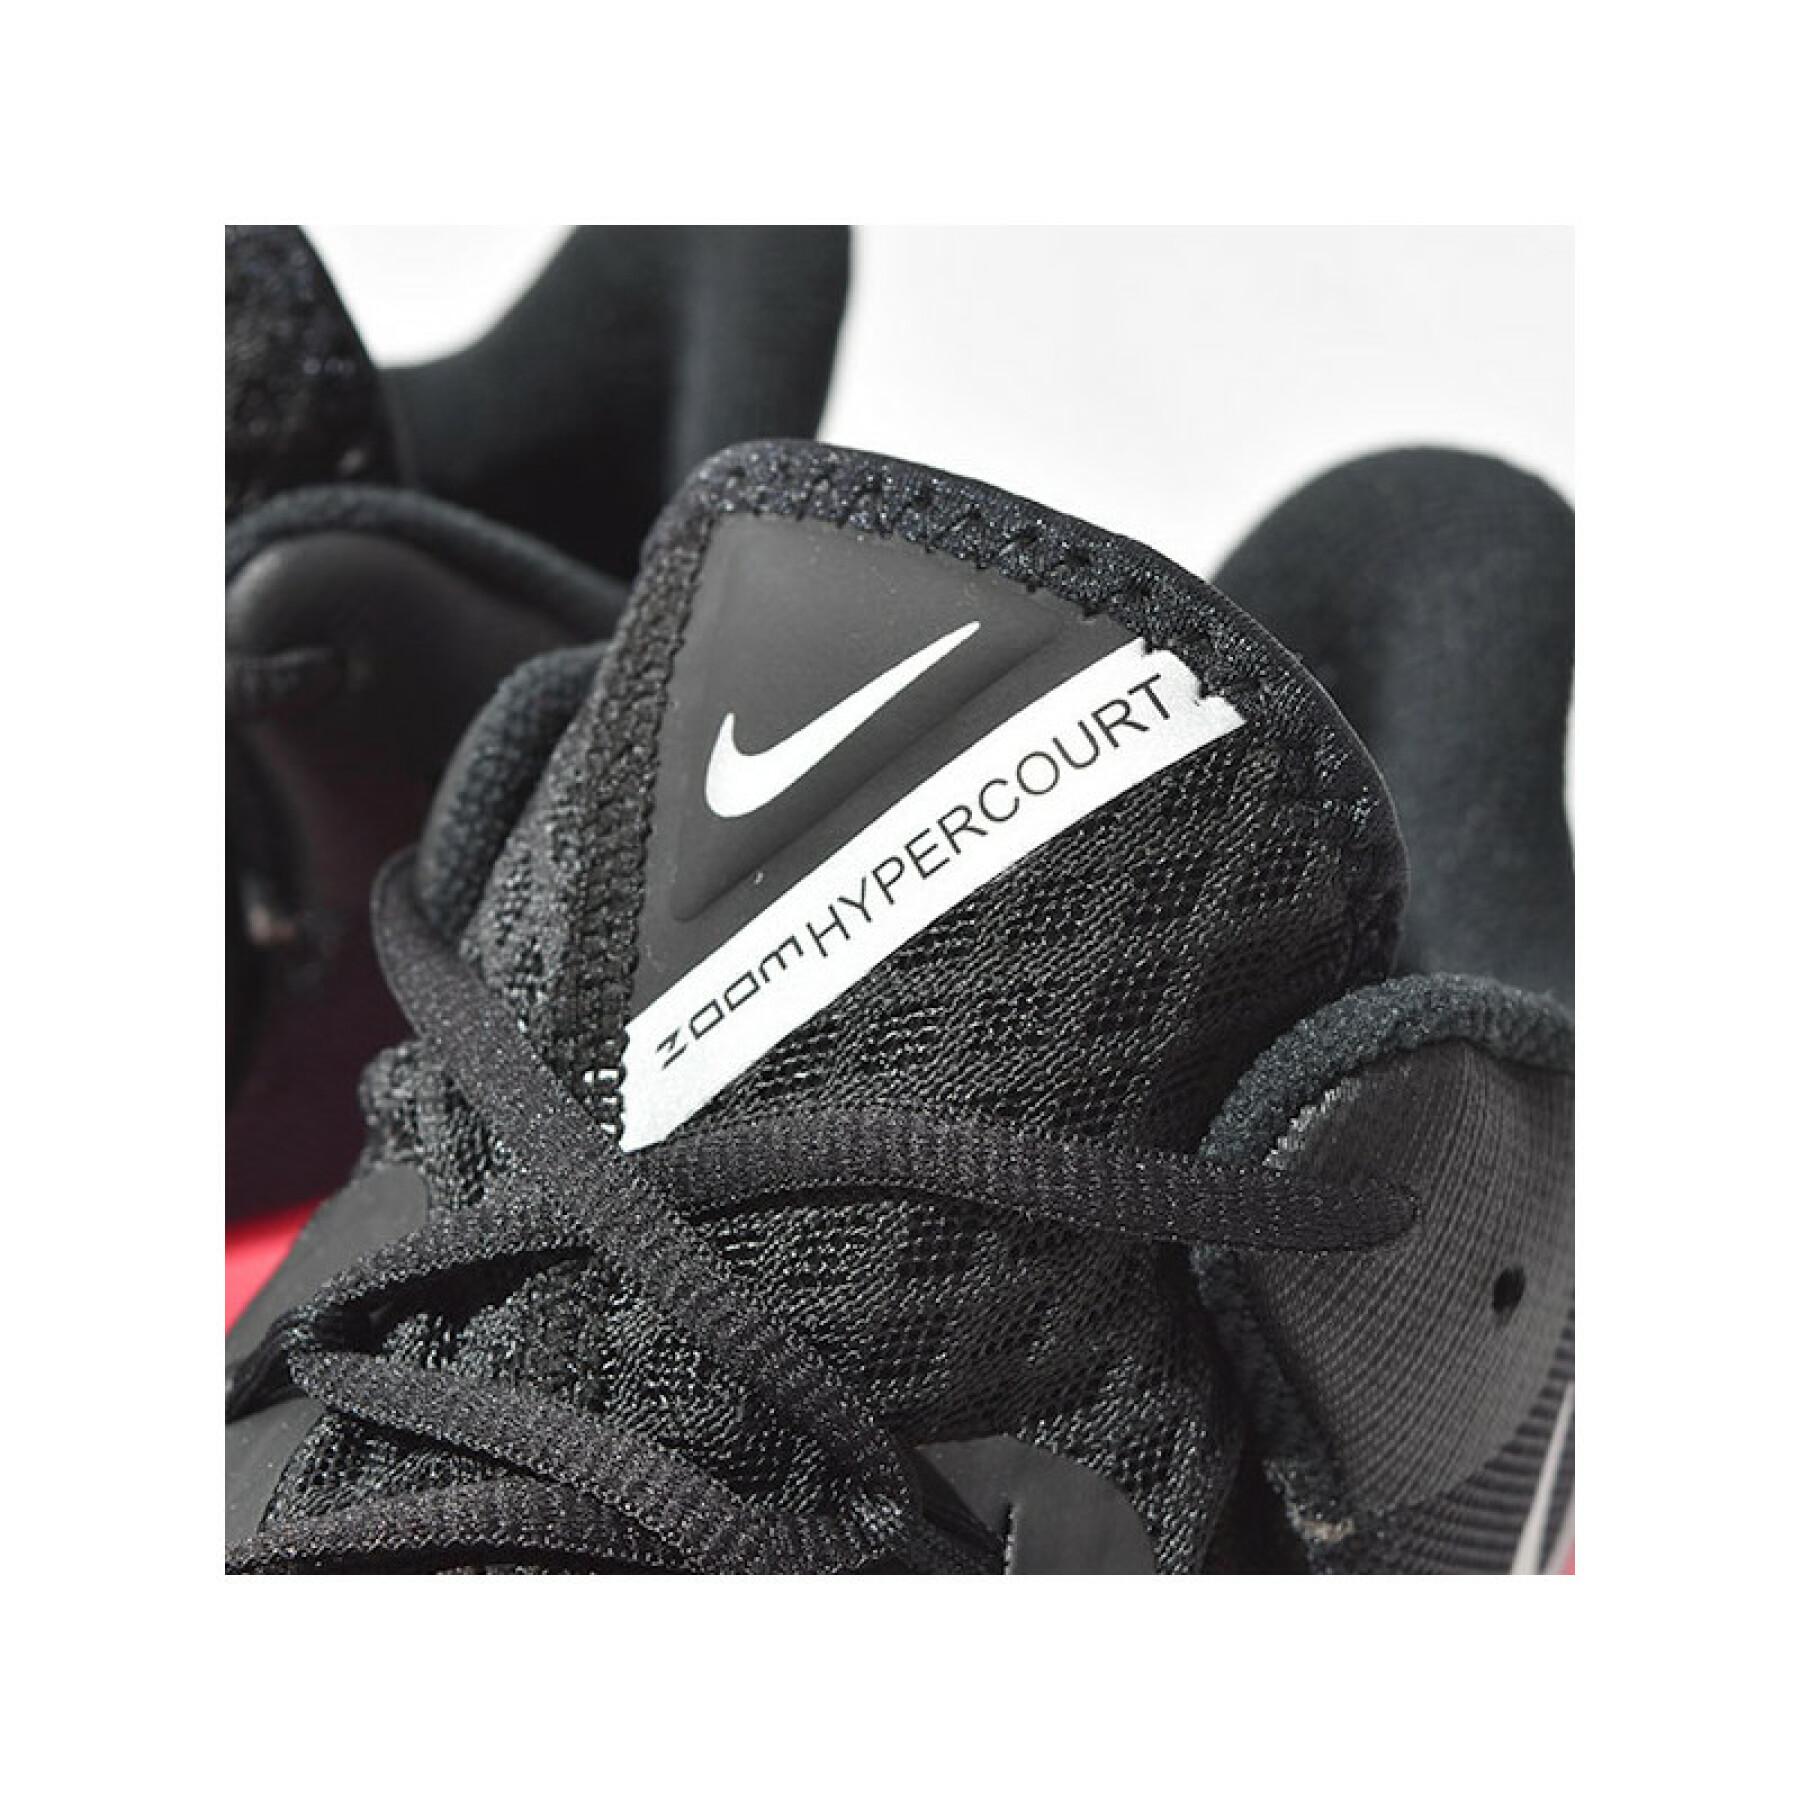 Schuhe Nike Zoom Hyperspeed Court 